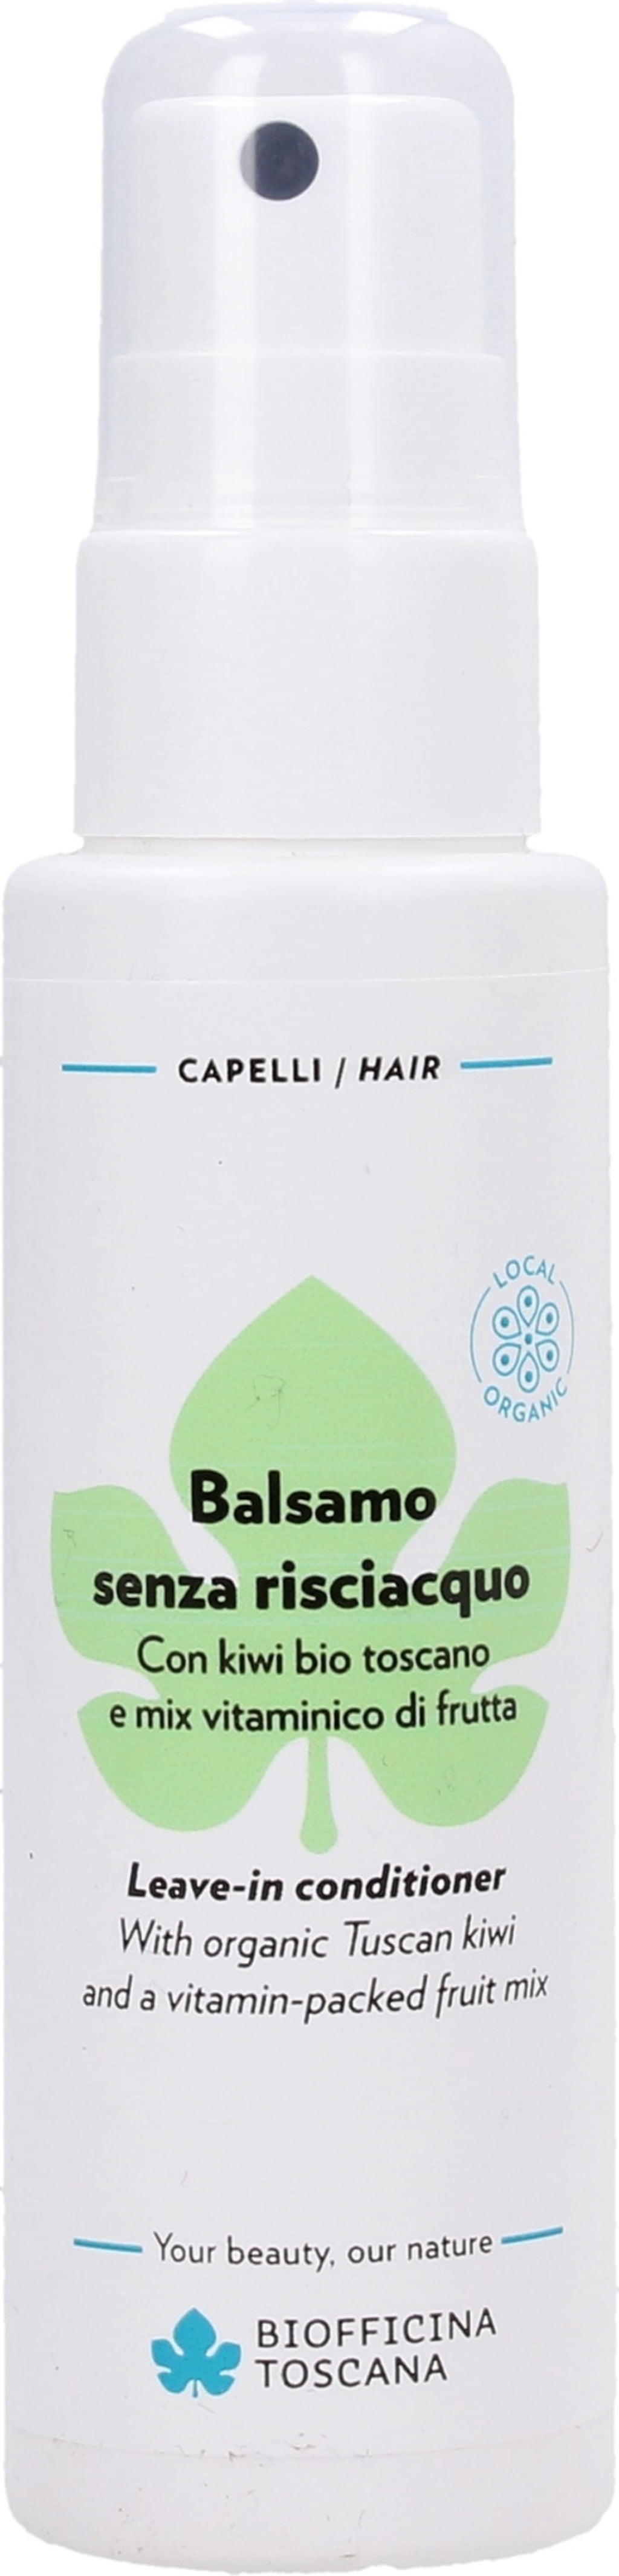 Biofficina Toscana Balsamo senza Risciacquo - 100 ml